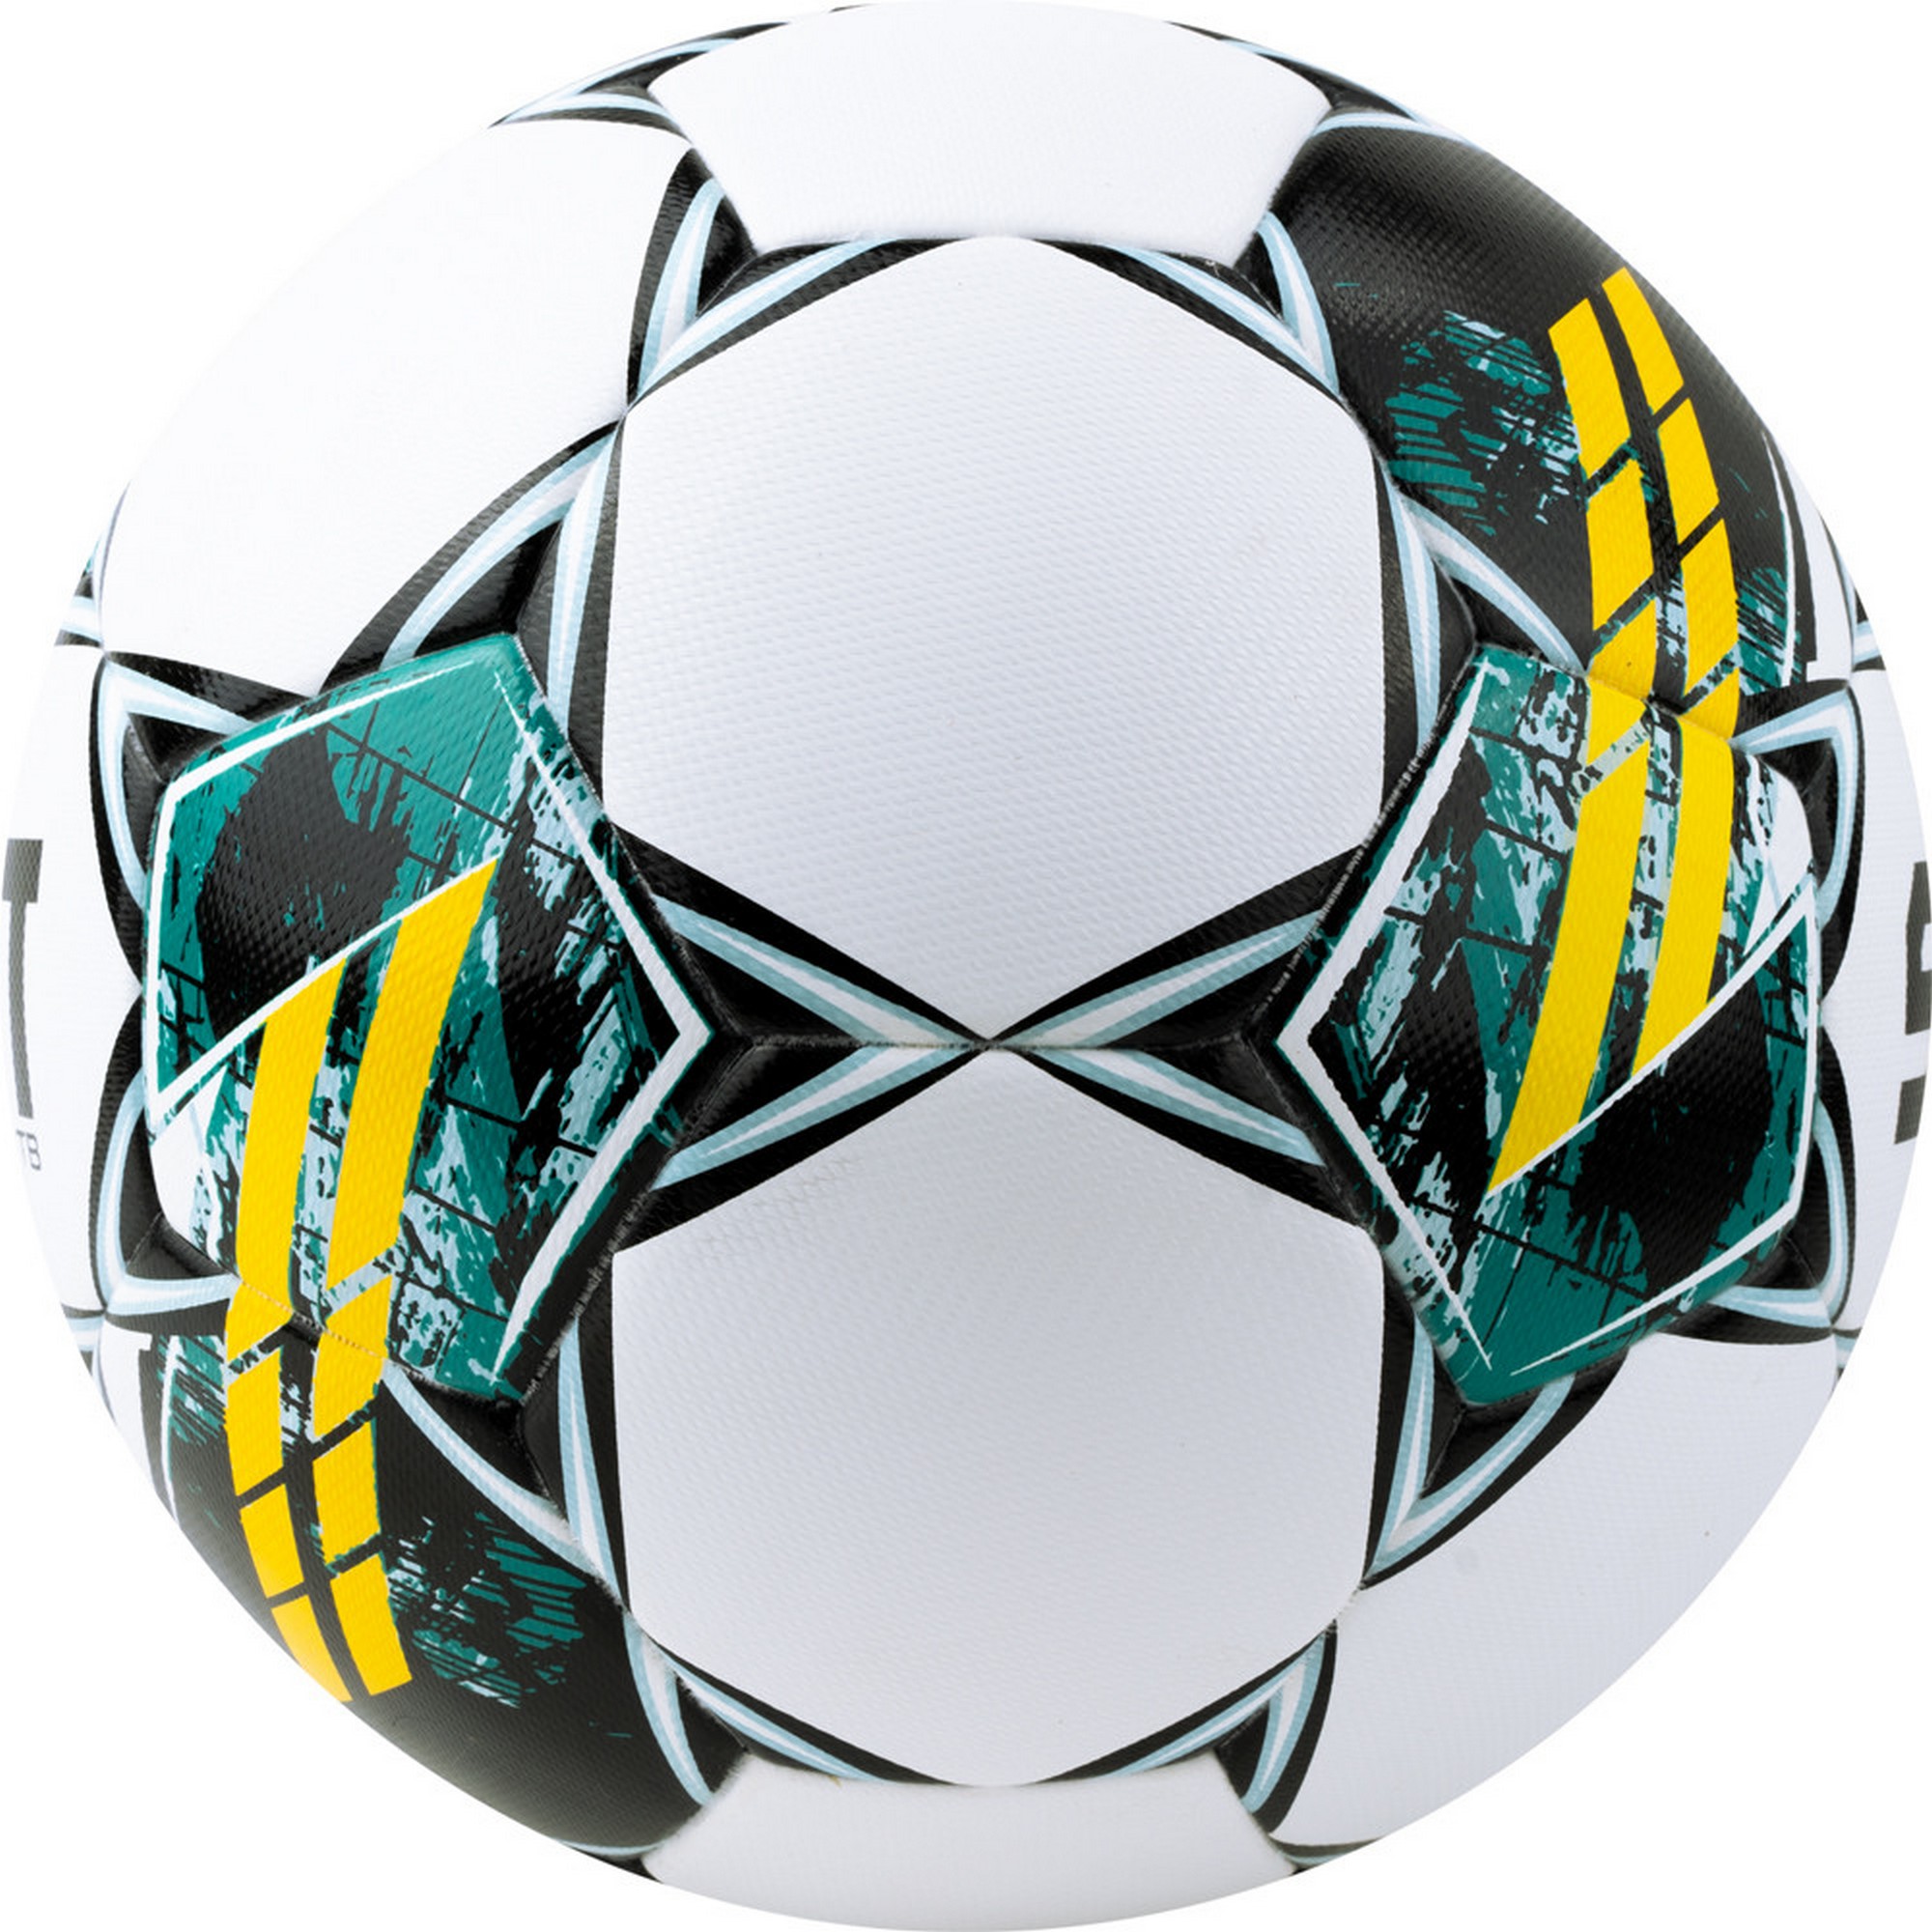 Мяч футбольный Select Pioneer TB V23 0865060005 р.5, FIFA Basic 2000_2000